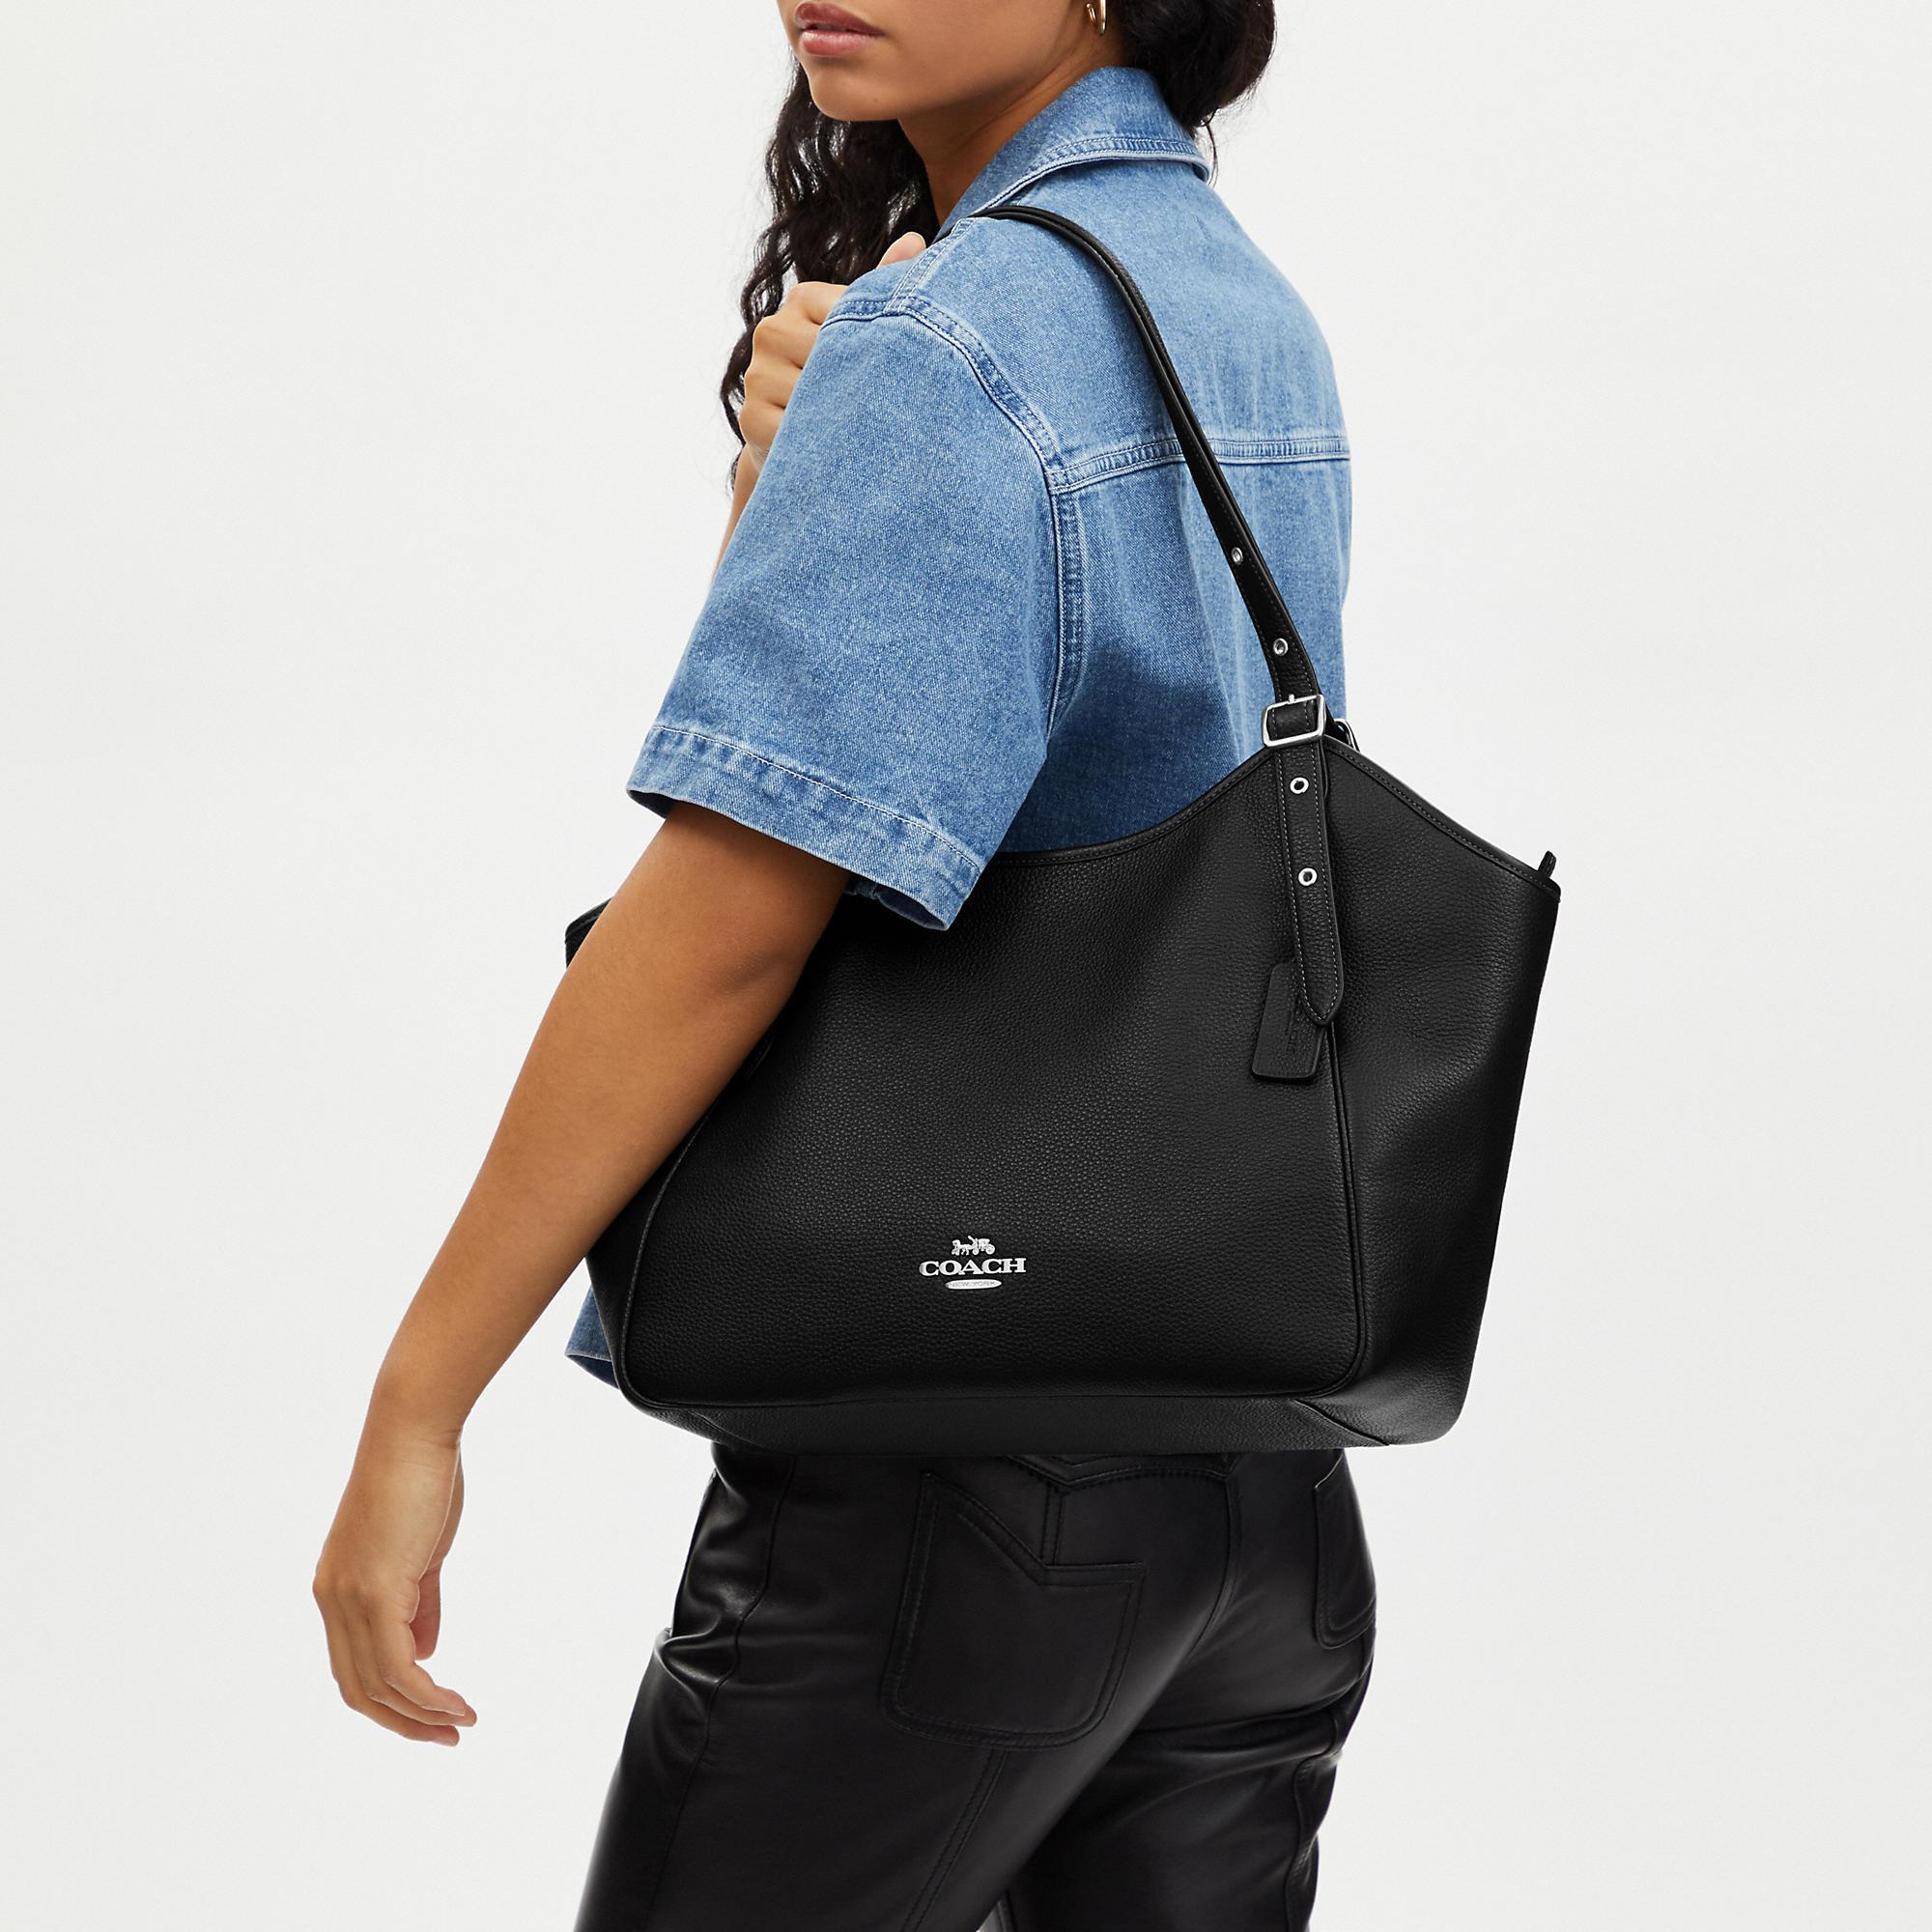 Coach Outlet Meadow Shoulder Bag - Black